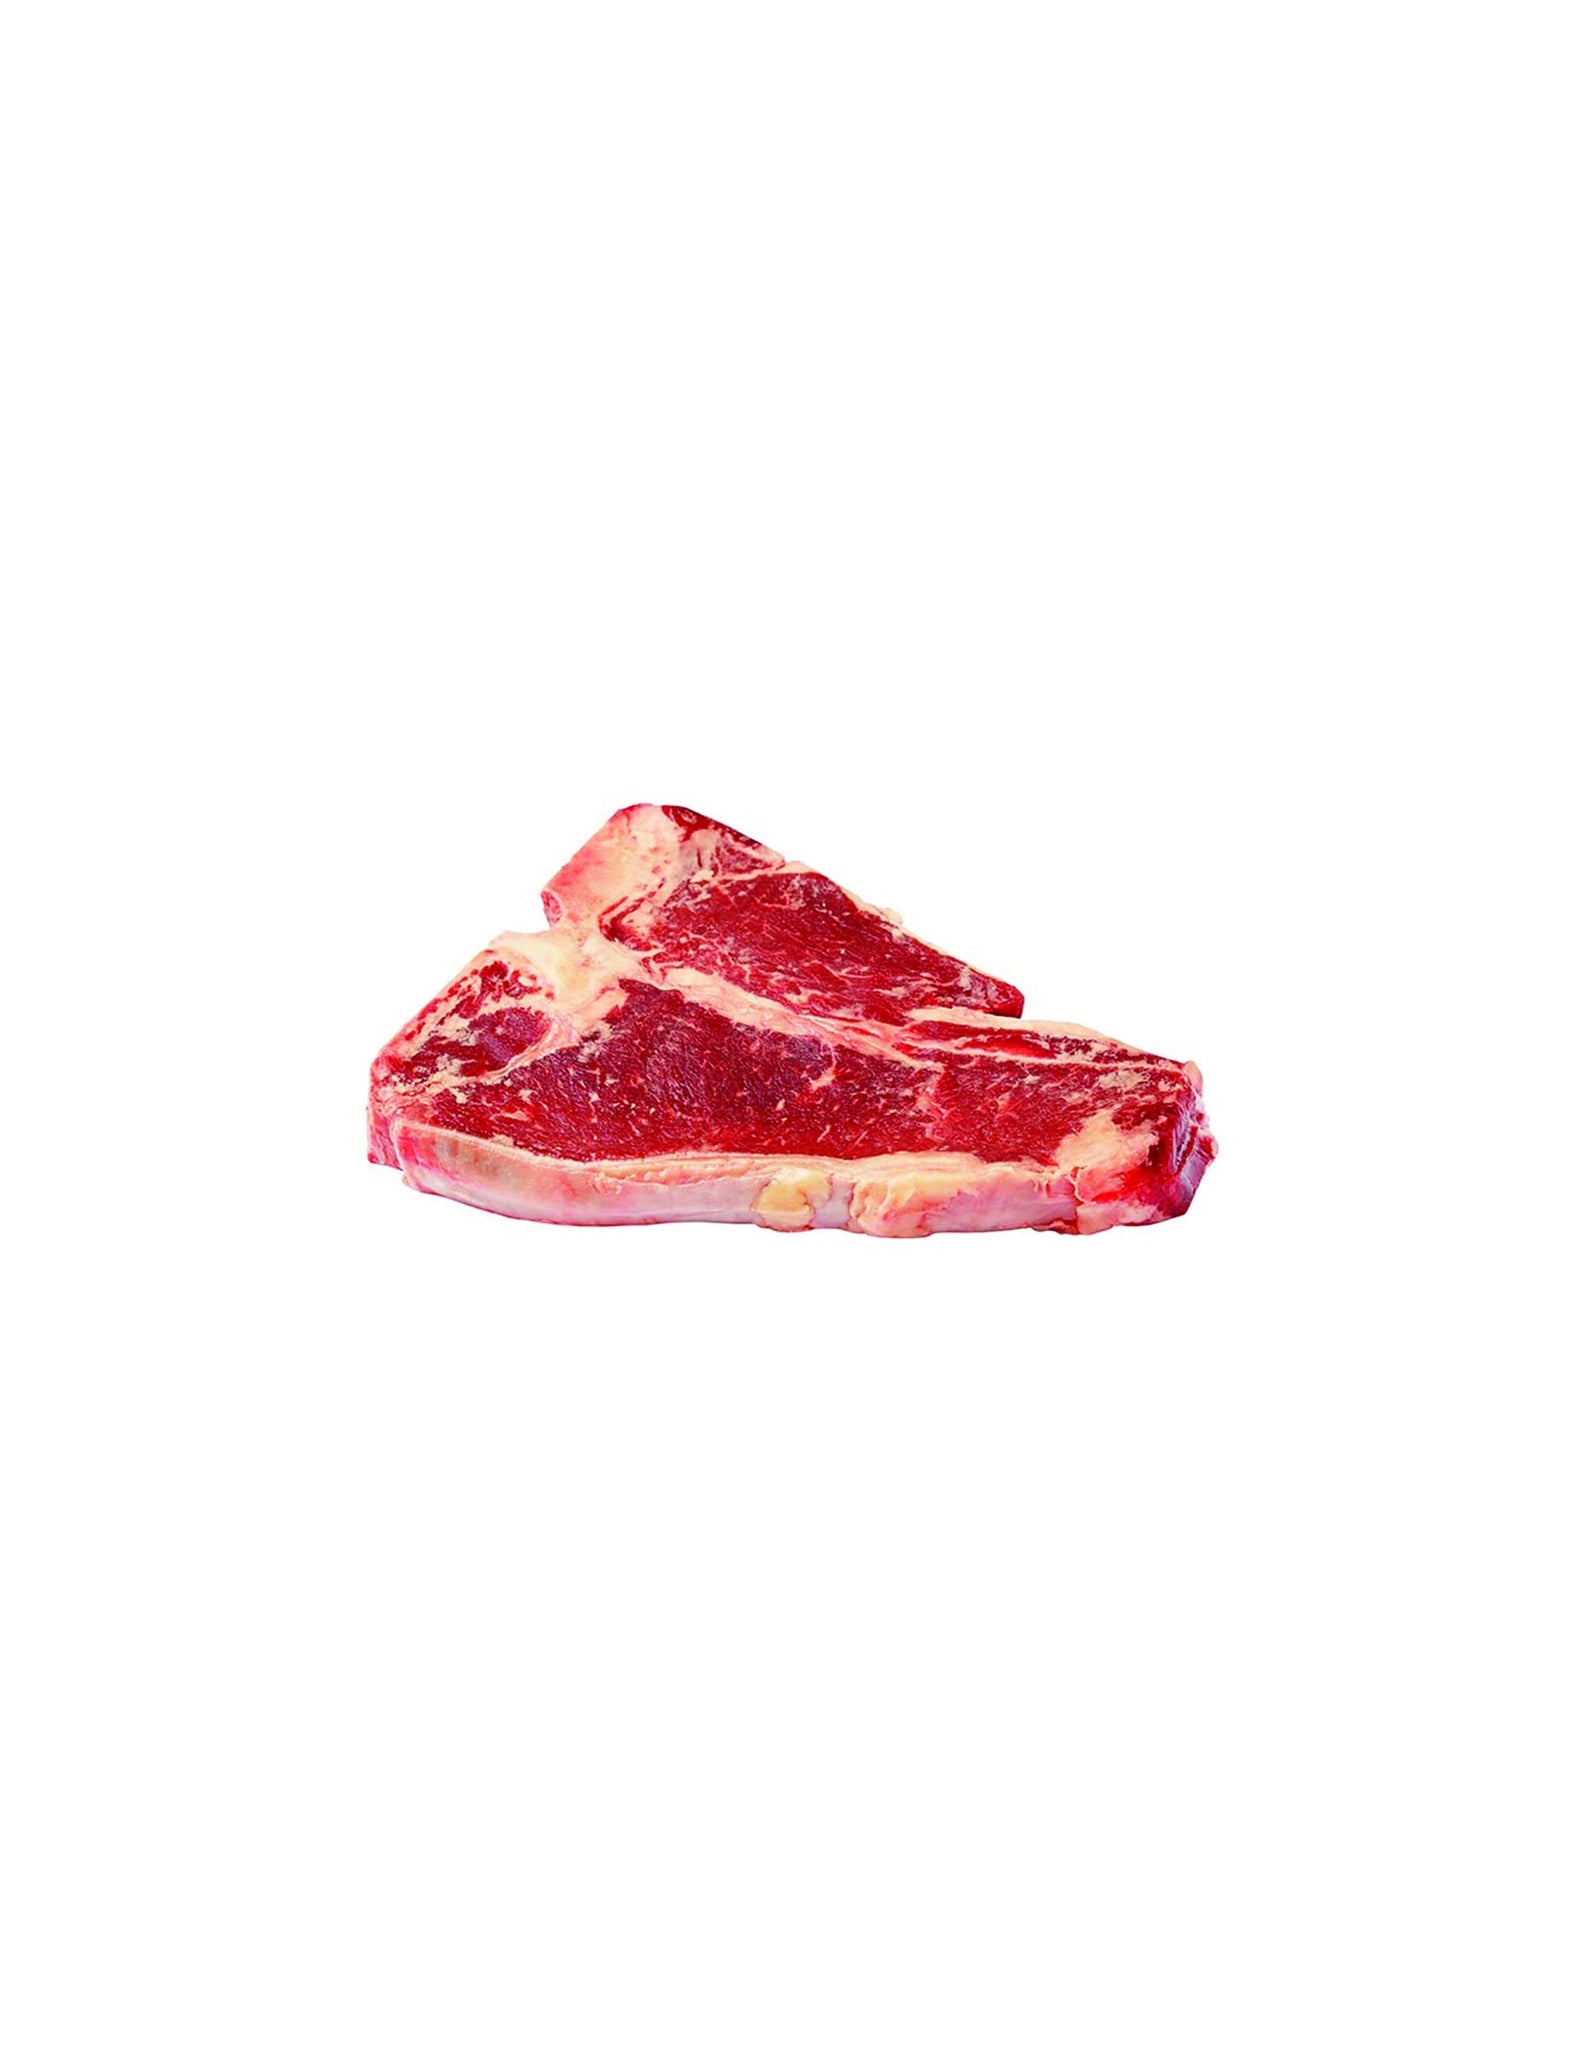 aba>Beef T Bone Steak, per lb